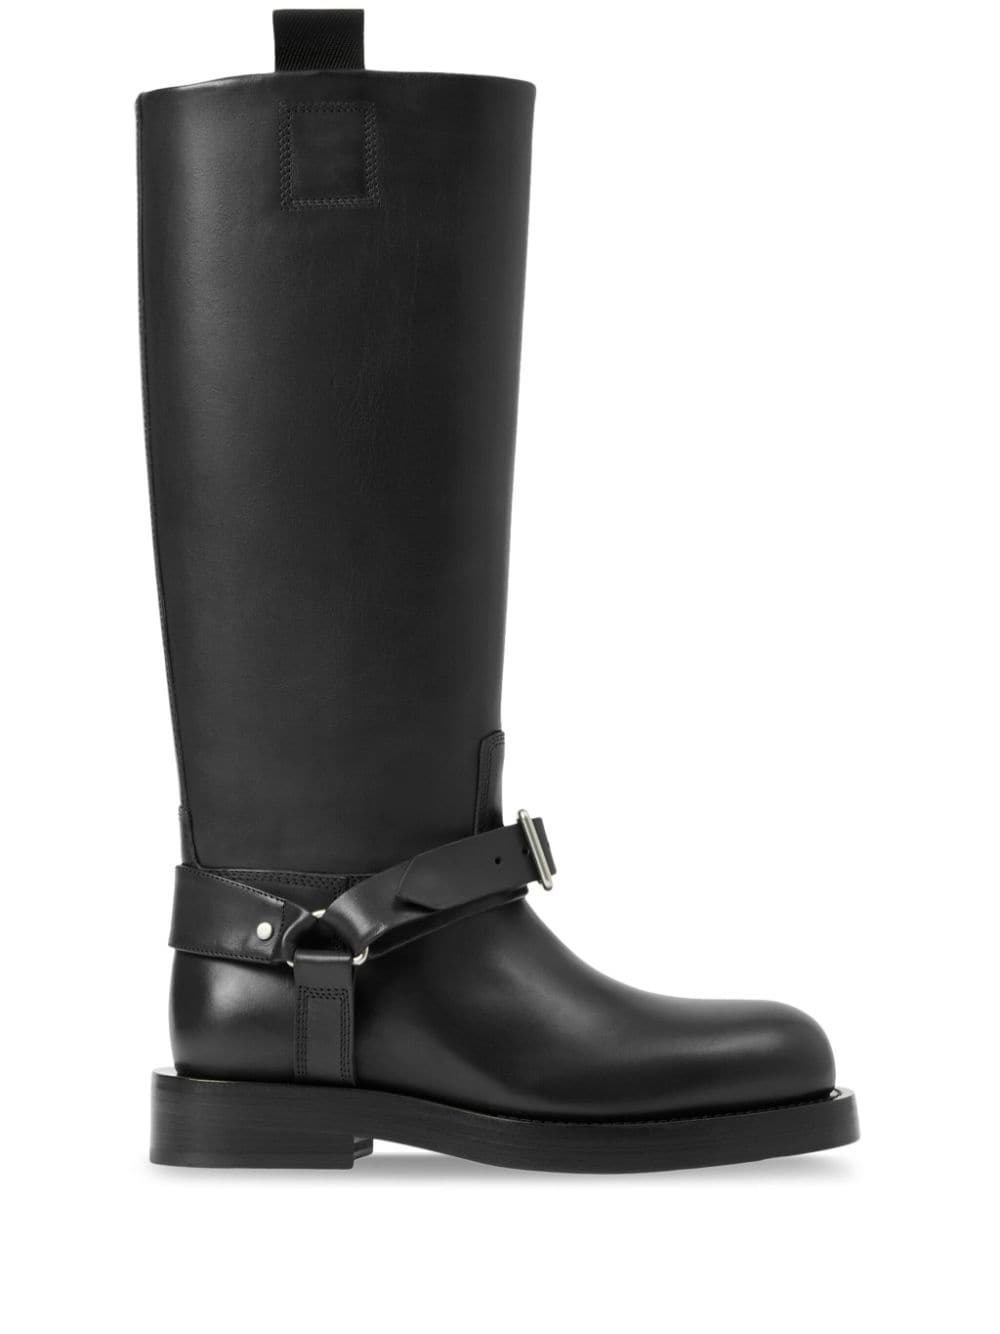 Burberry Women's Simeon Signature Check Rain Boots